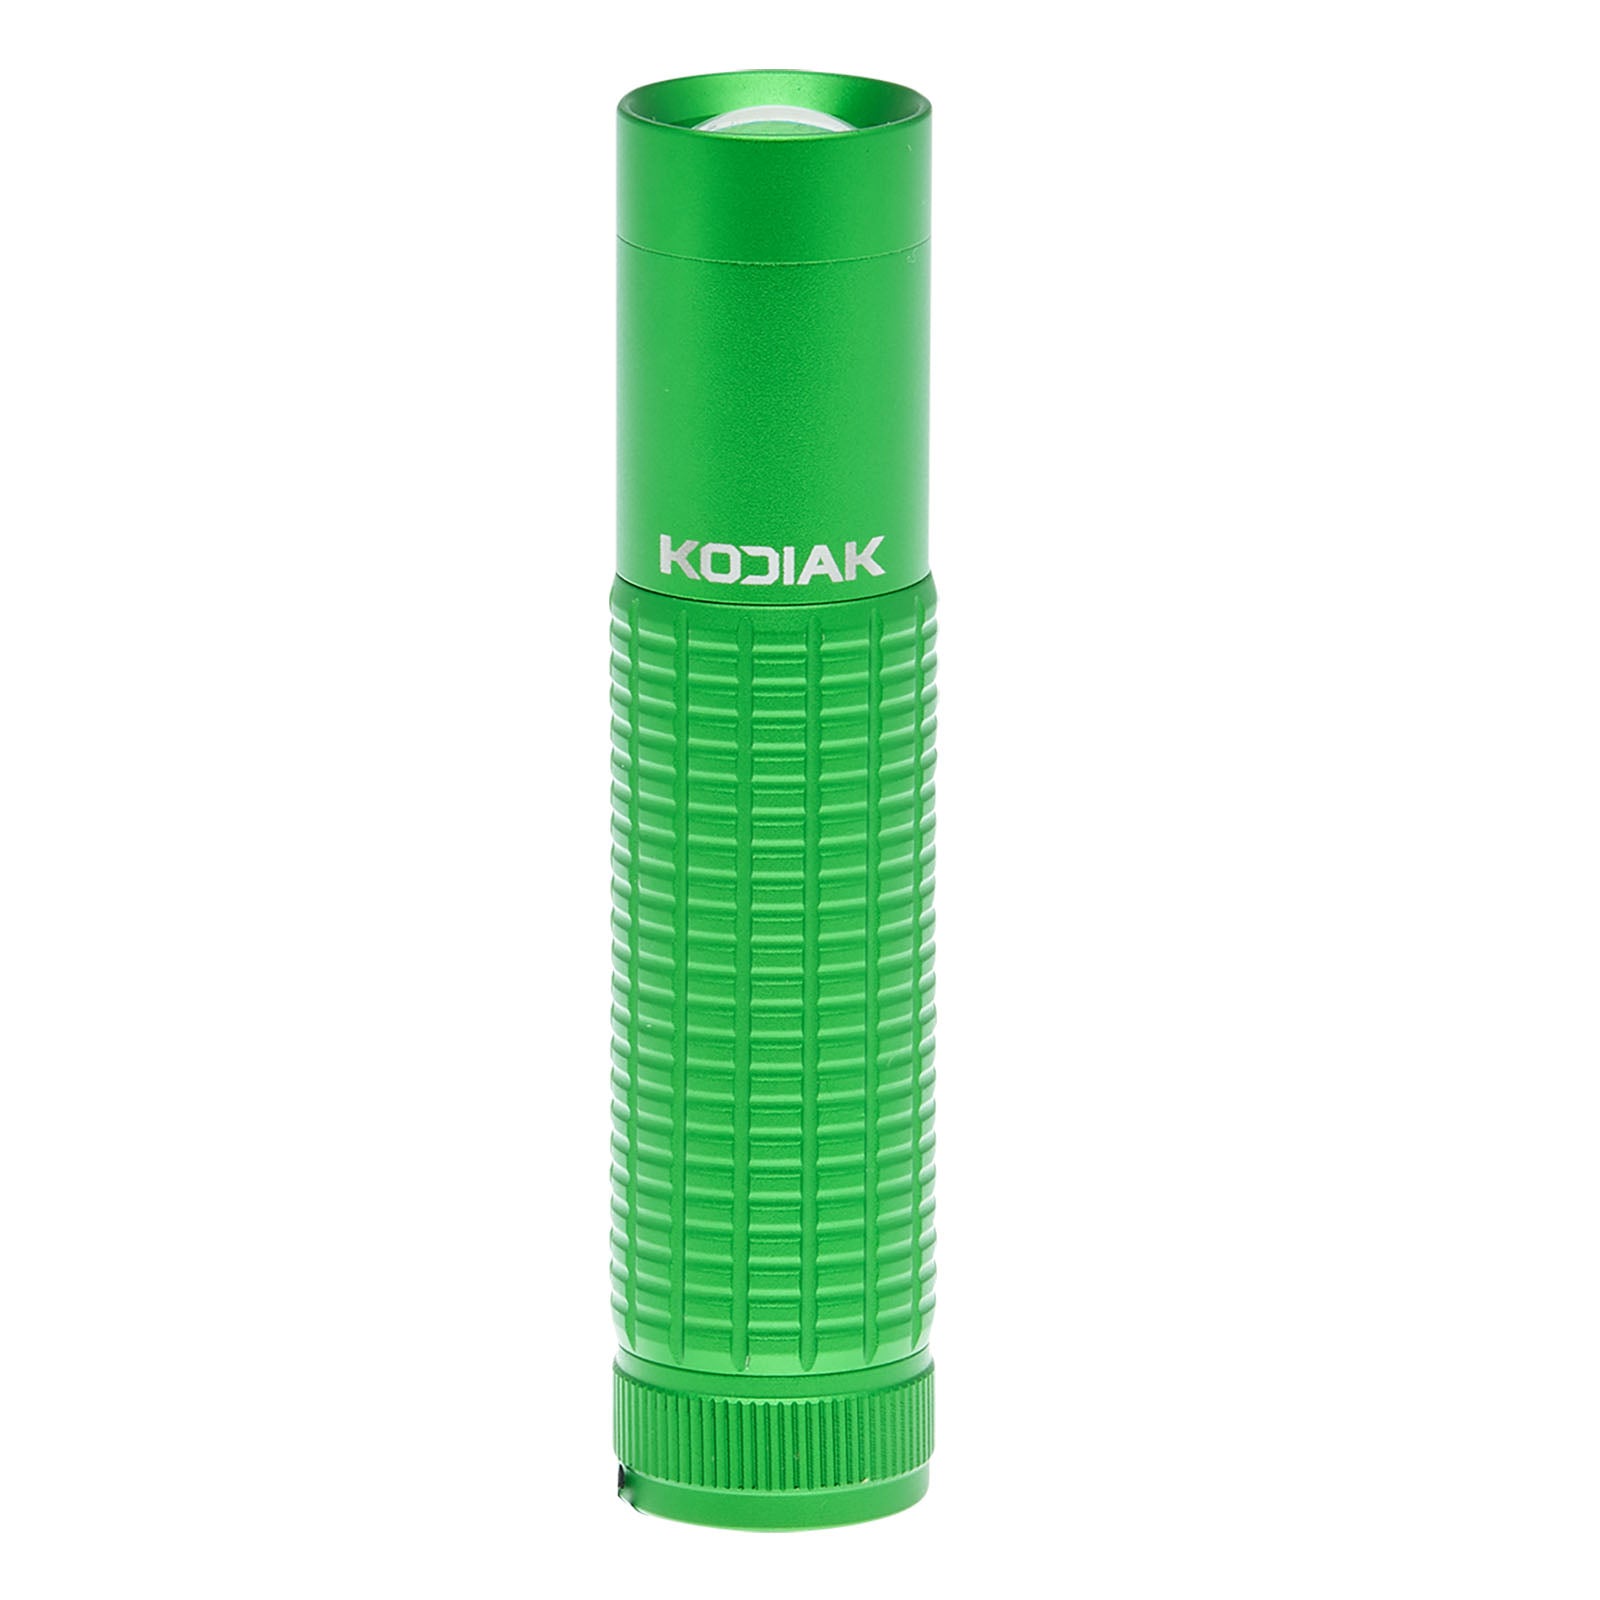 Kodiak Slim 700 Lumen Tactical Grade Flashlight